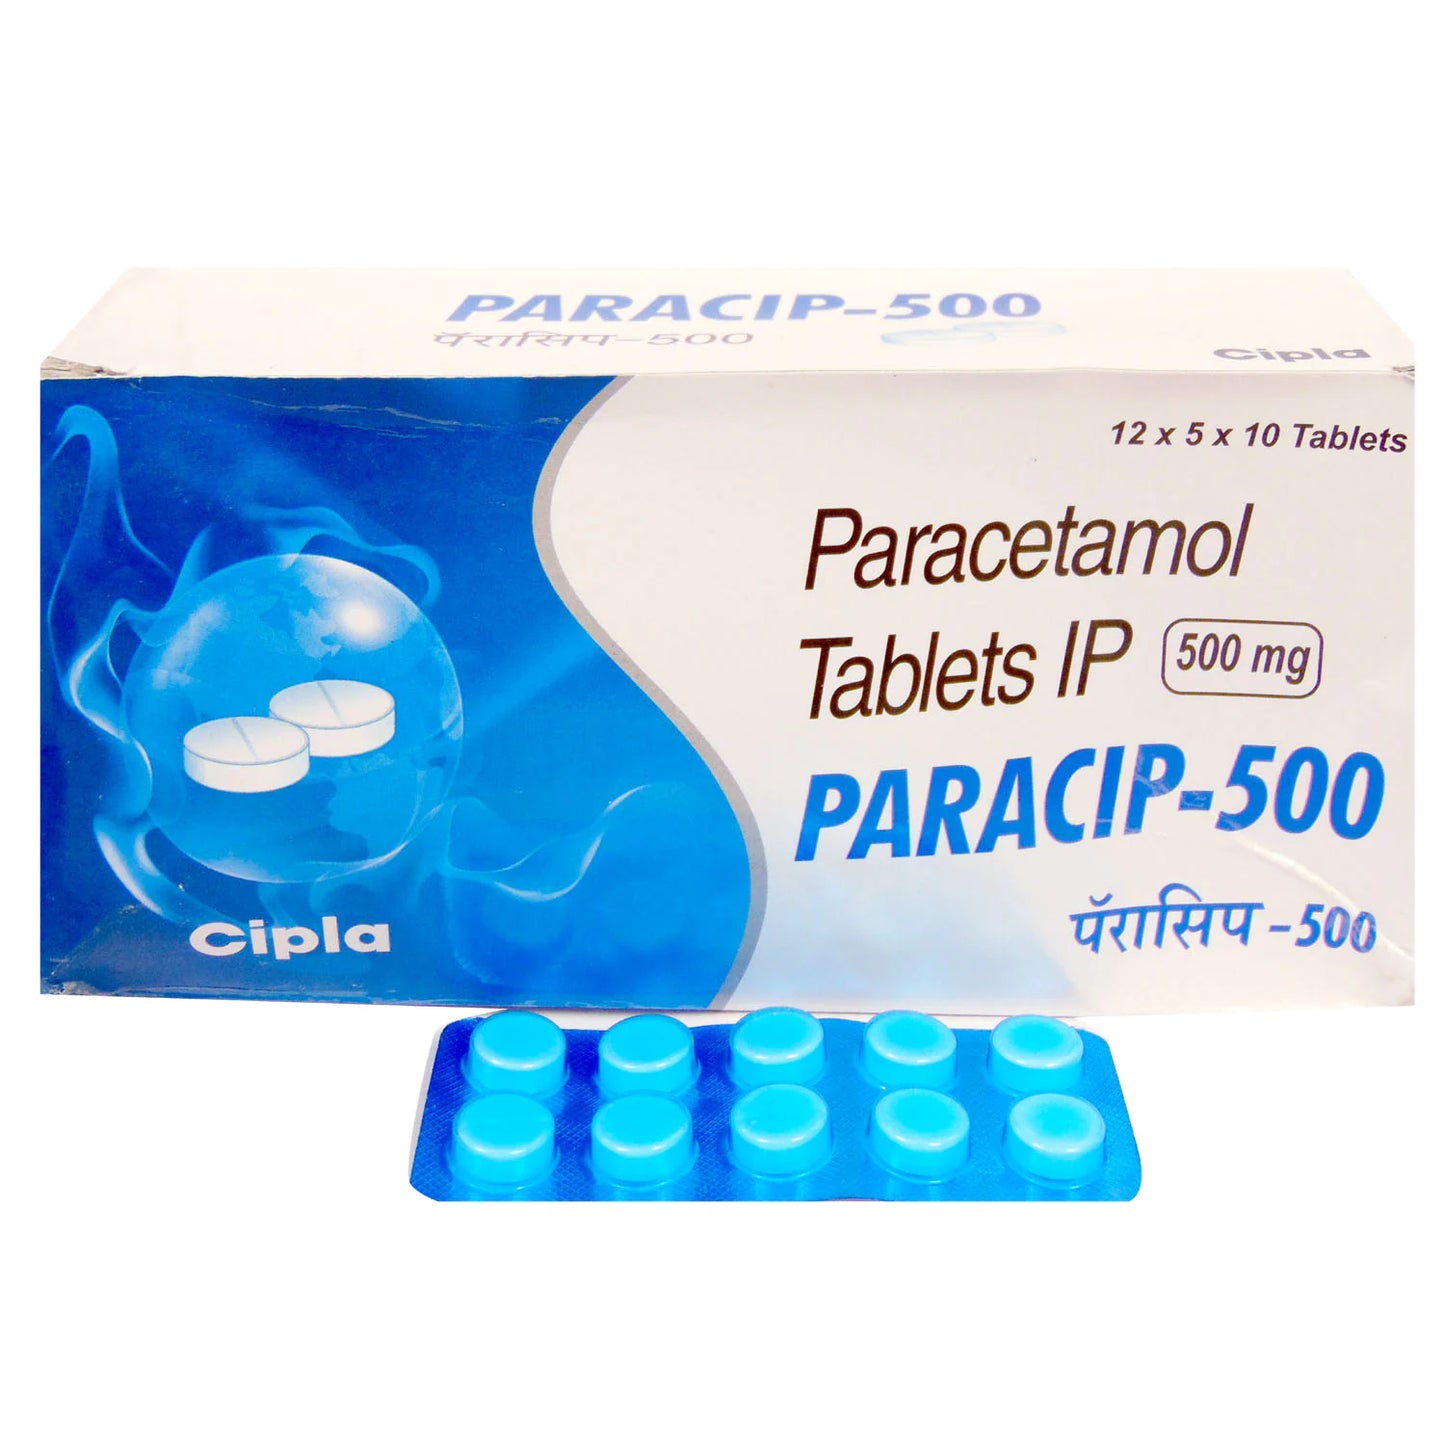 Paracip-500 MG Tablet